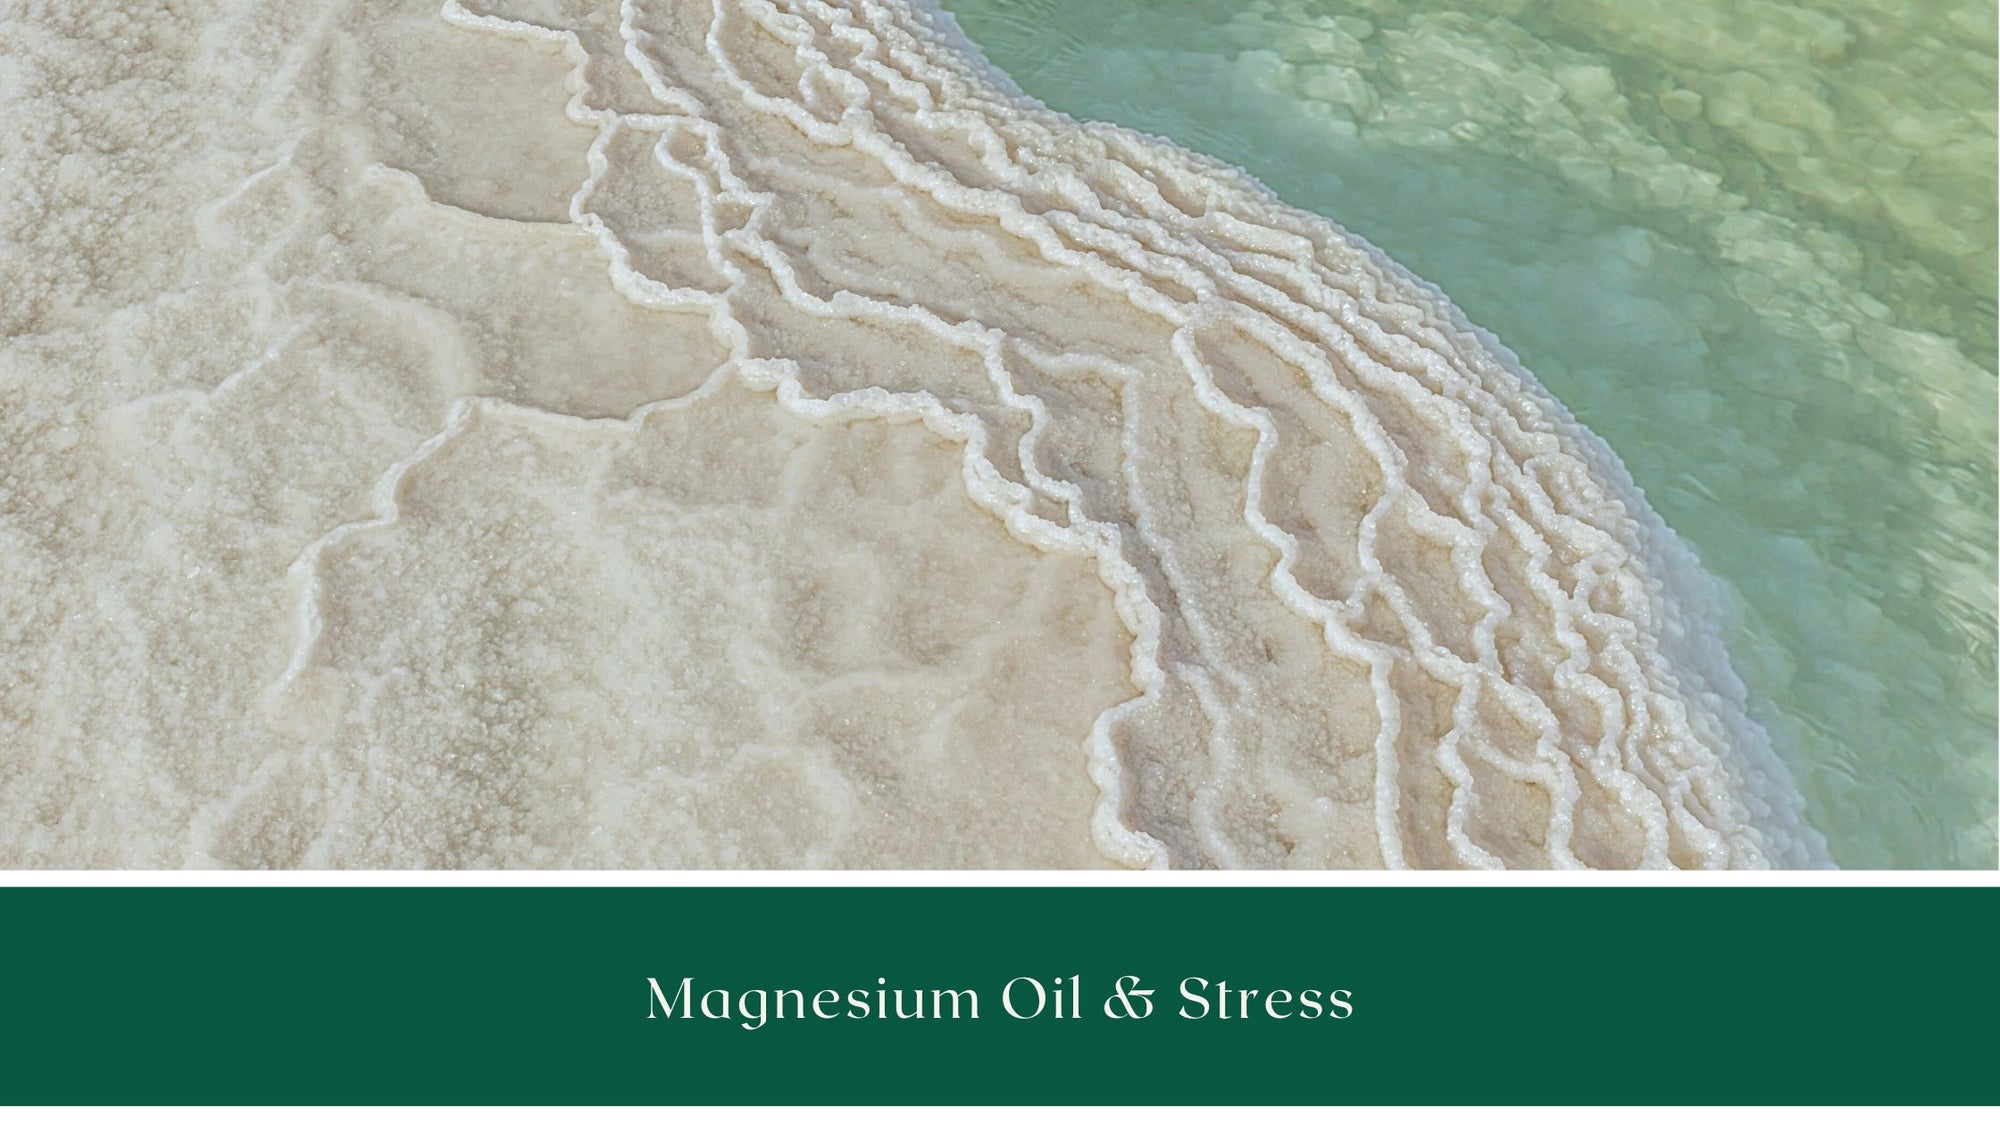 Magnesnium Oil & Stress